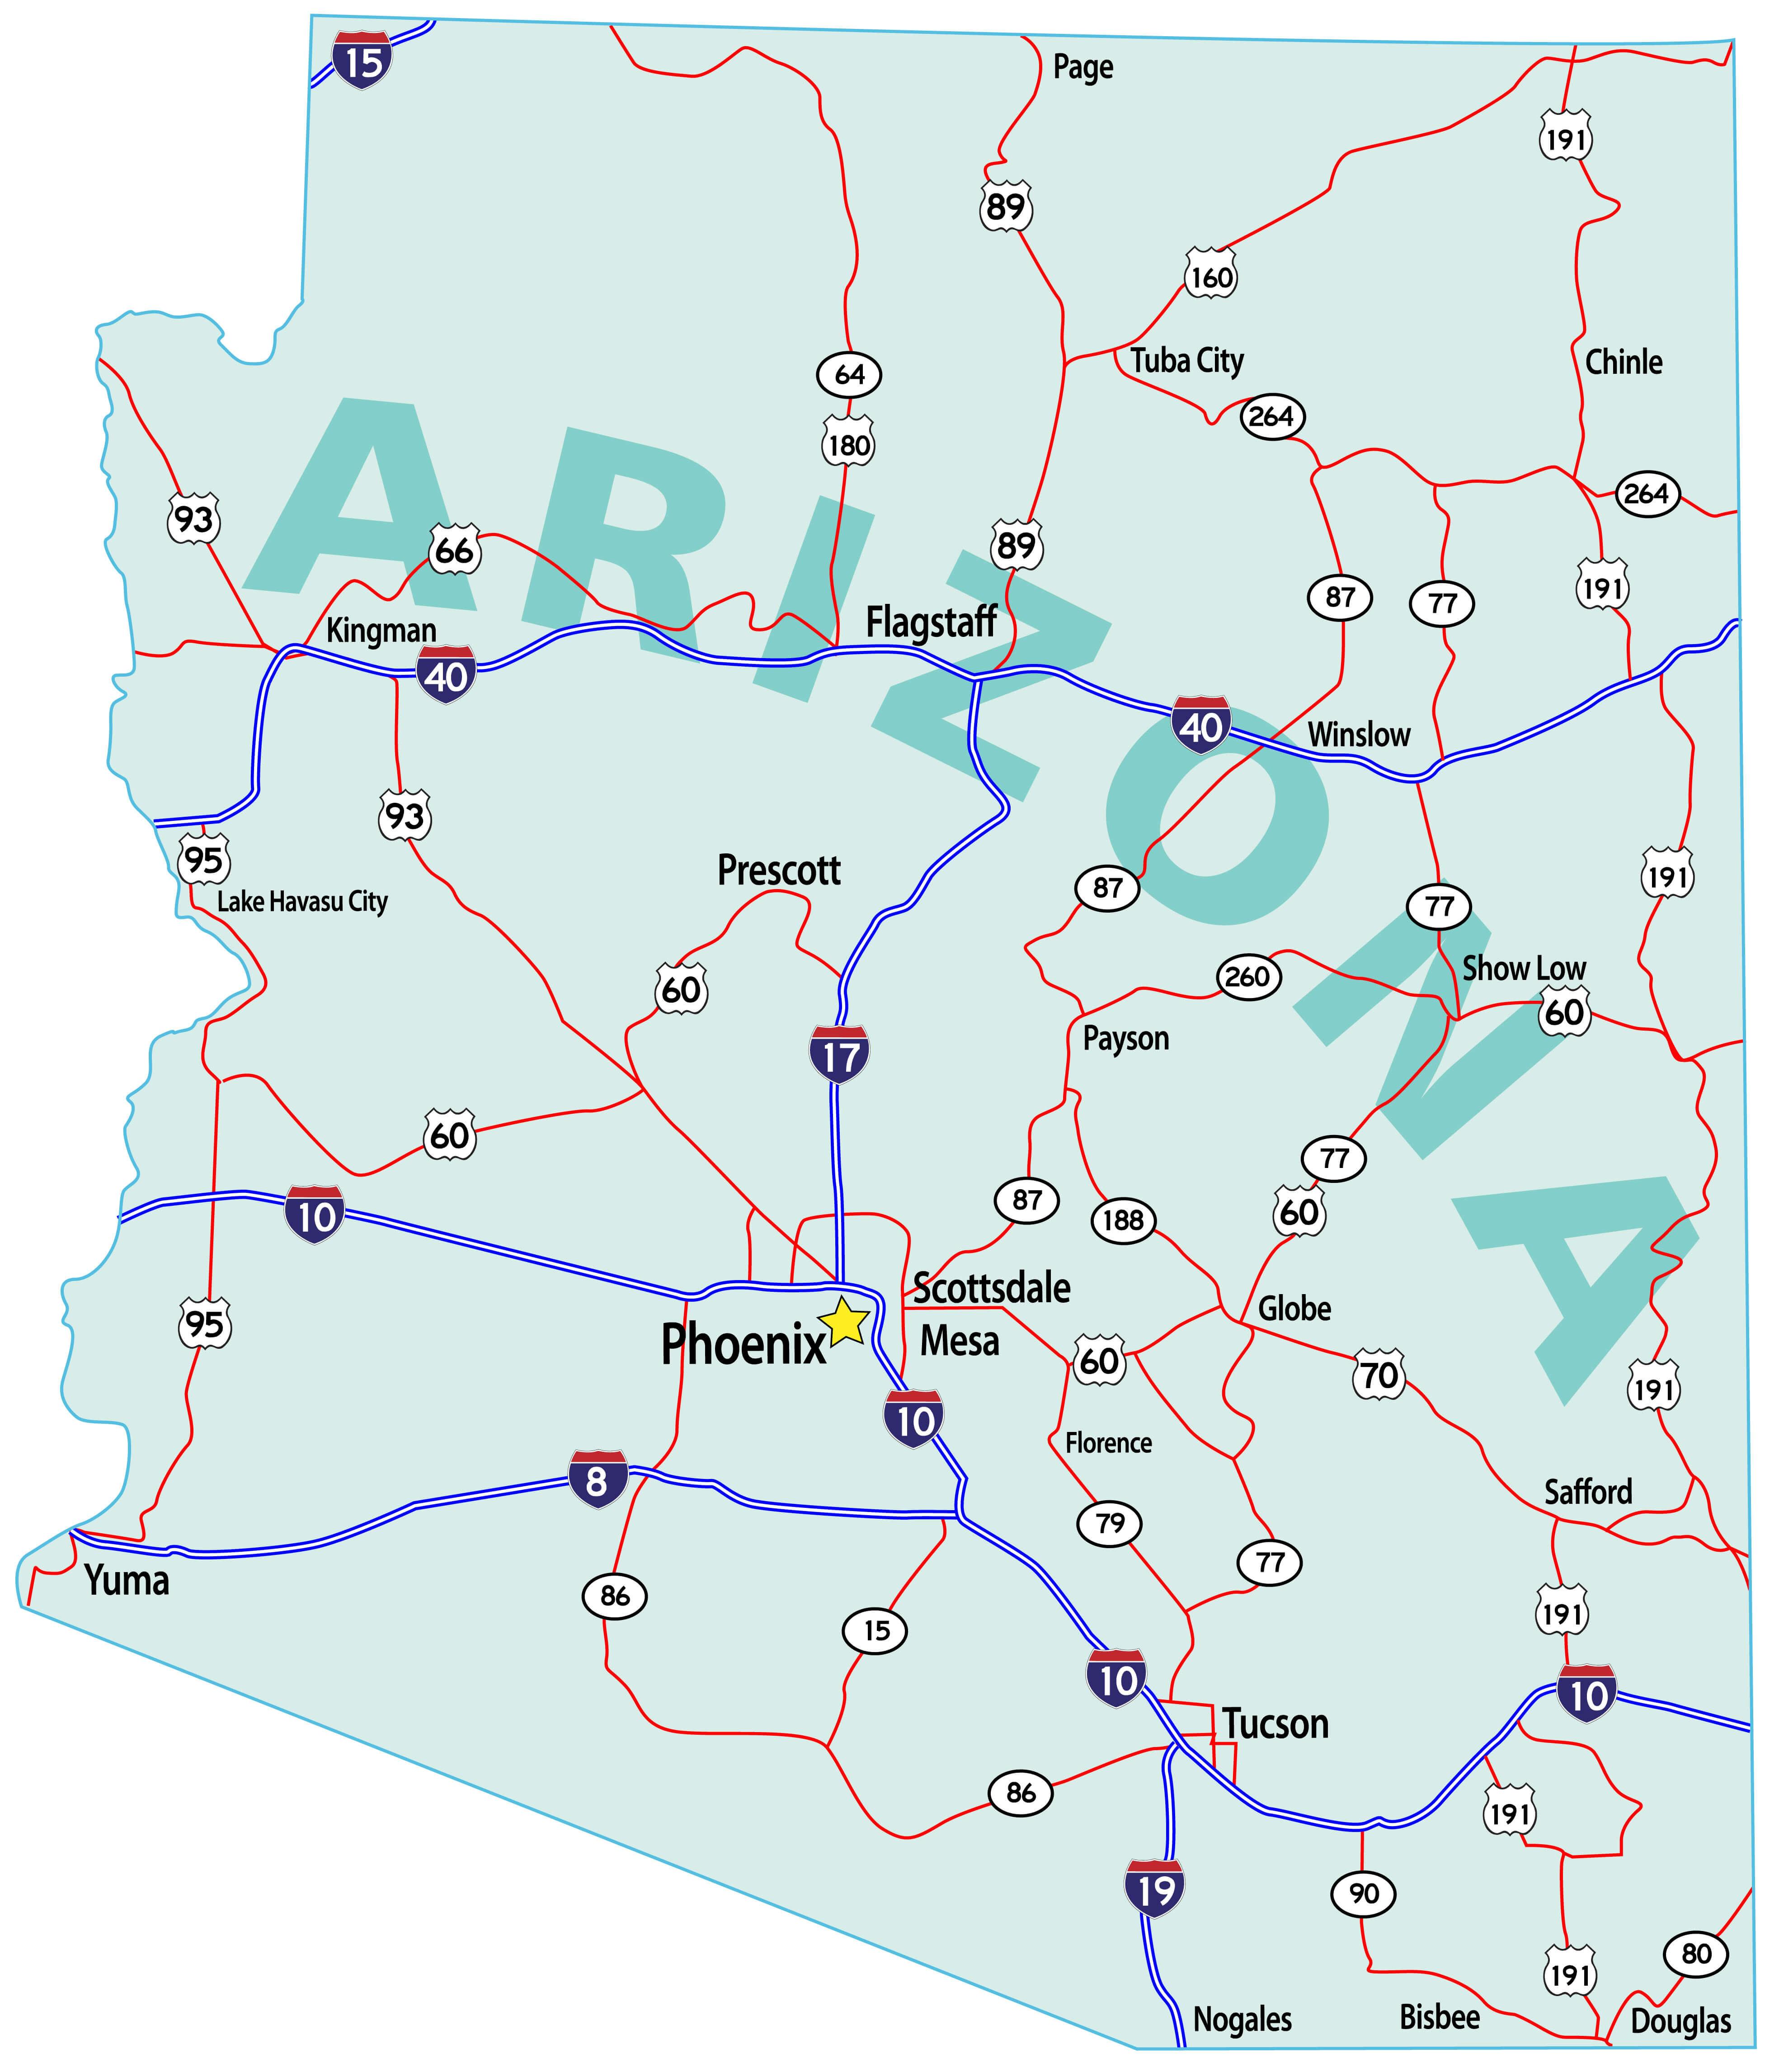 Arizona state road map with Interstates